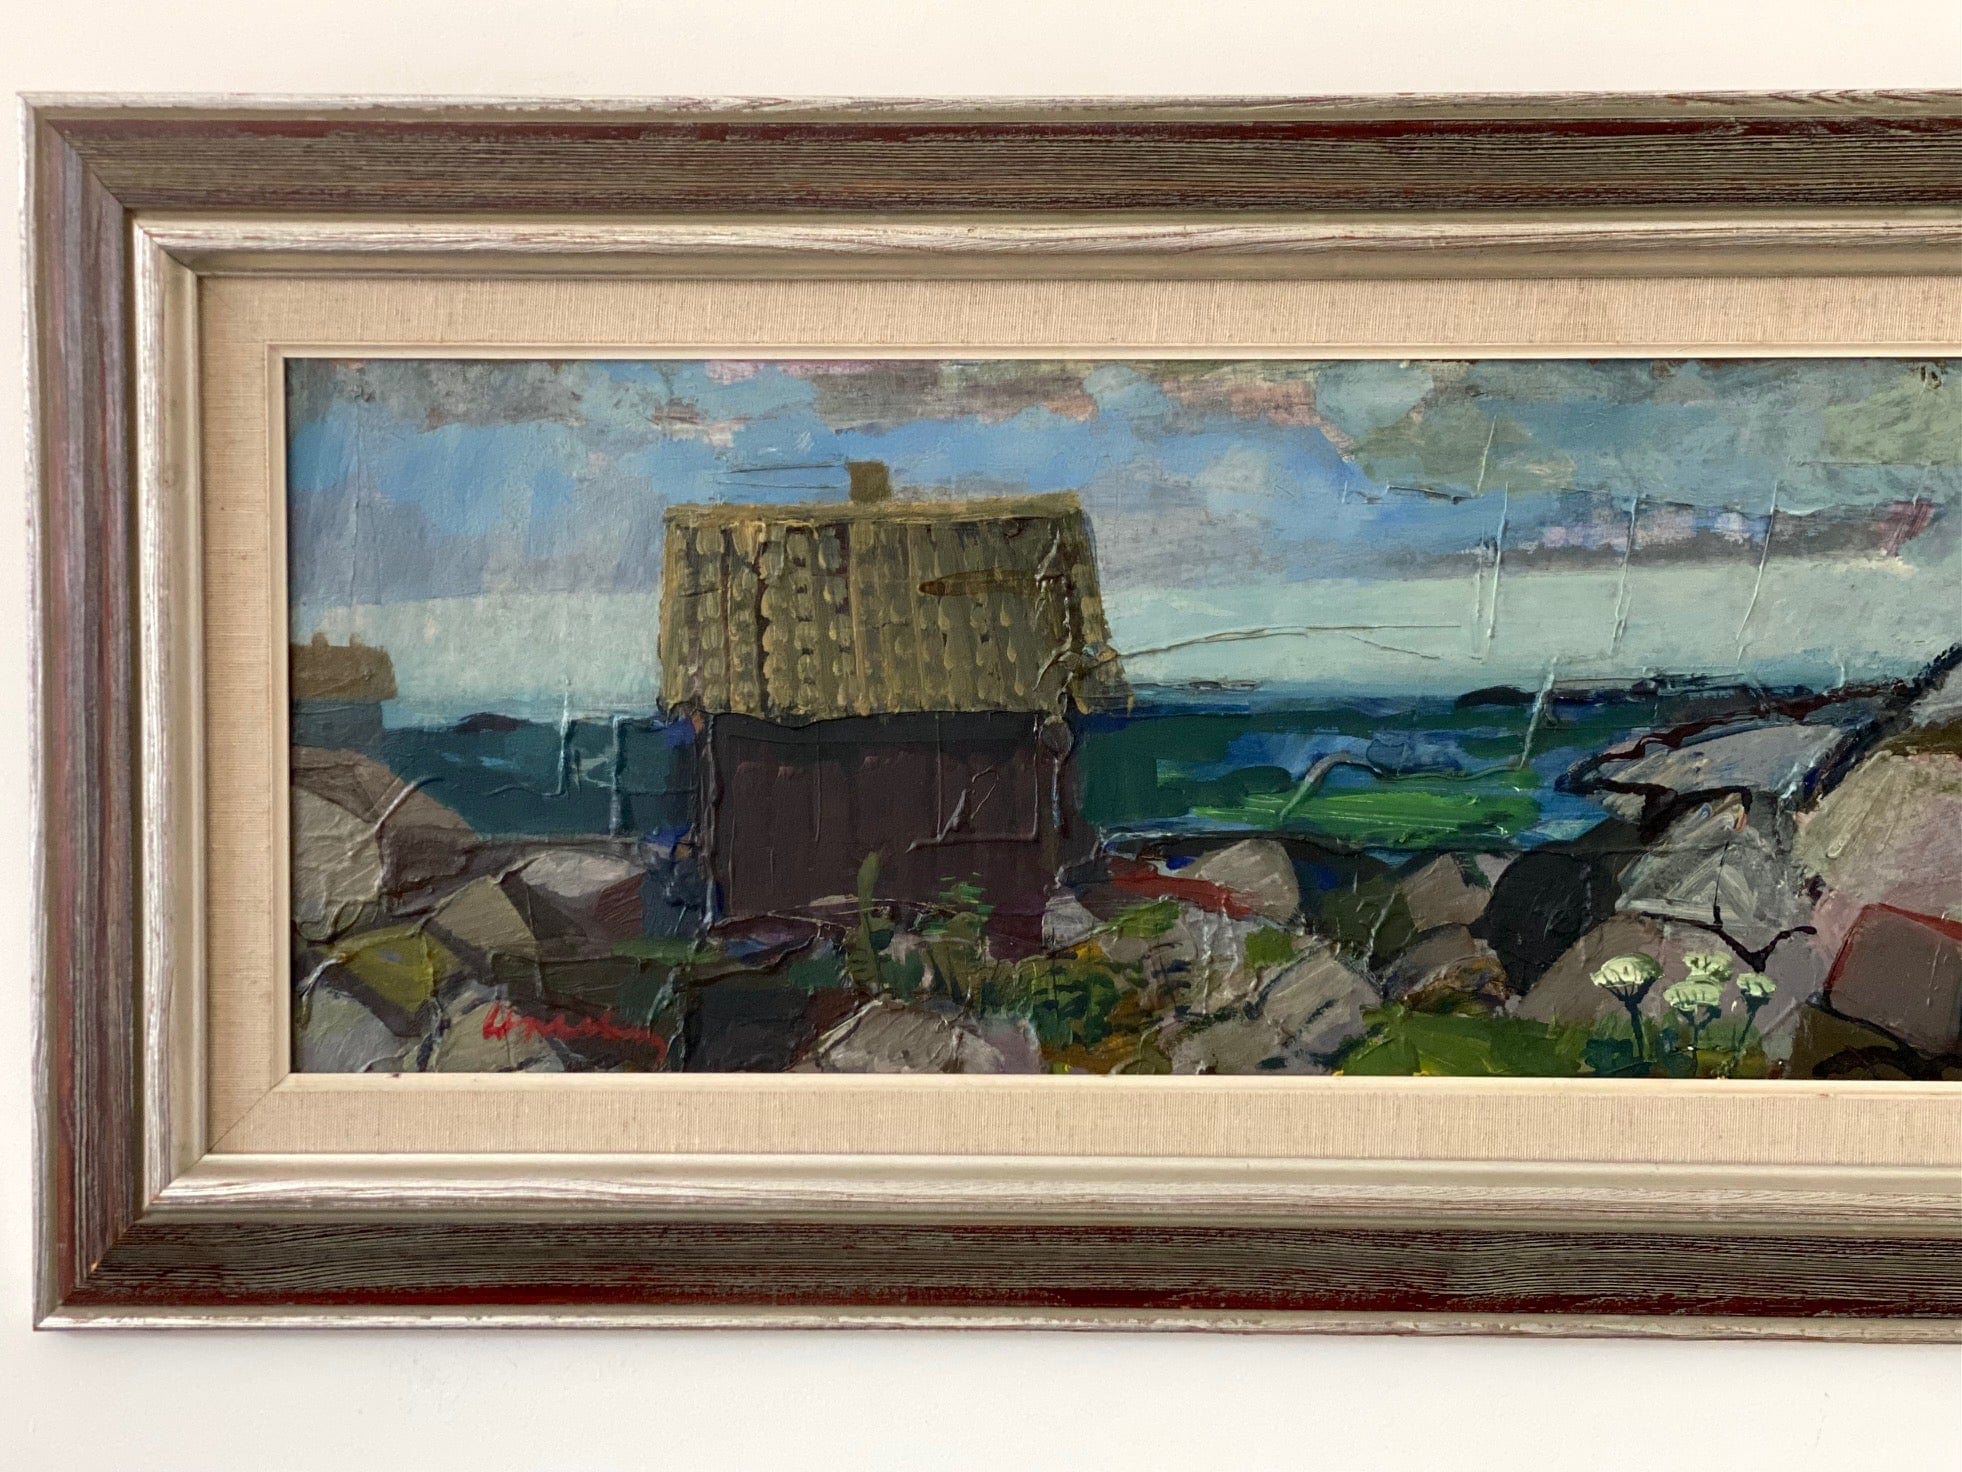 KEPT London Coastal scene, Bertil Vahlberg (1923-1980)